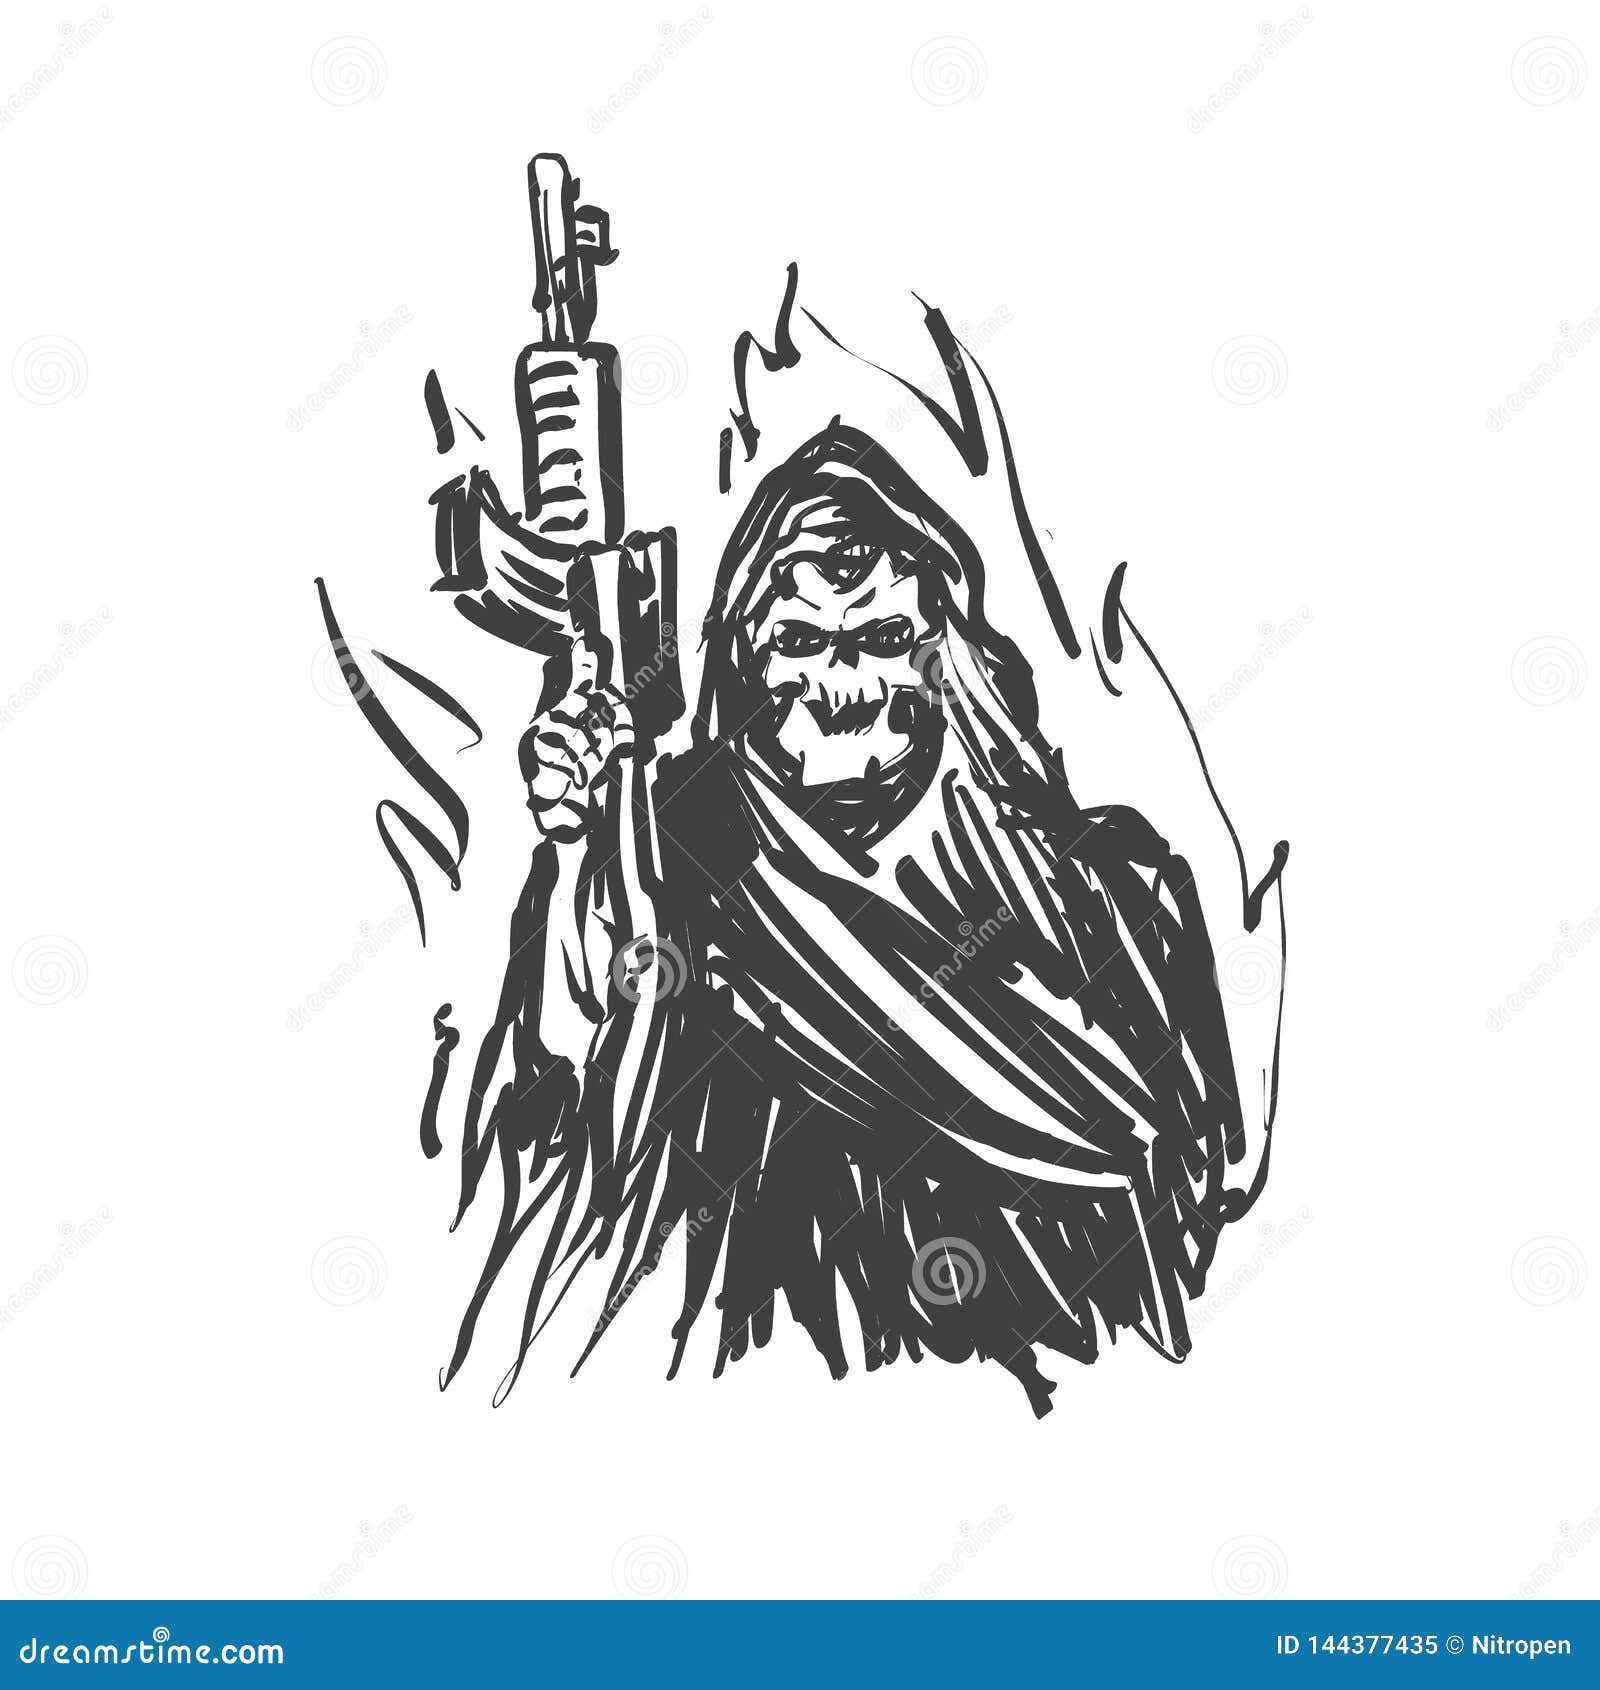 Grim reaper holding machine gun - Vector illustration.